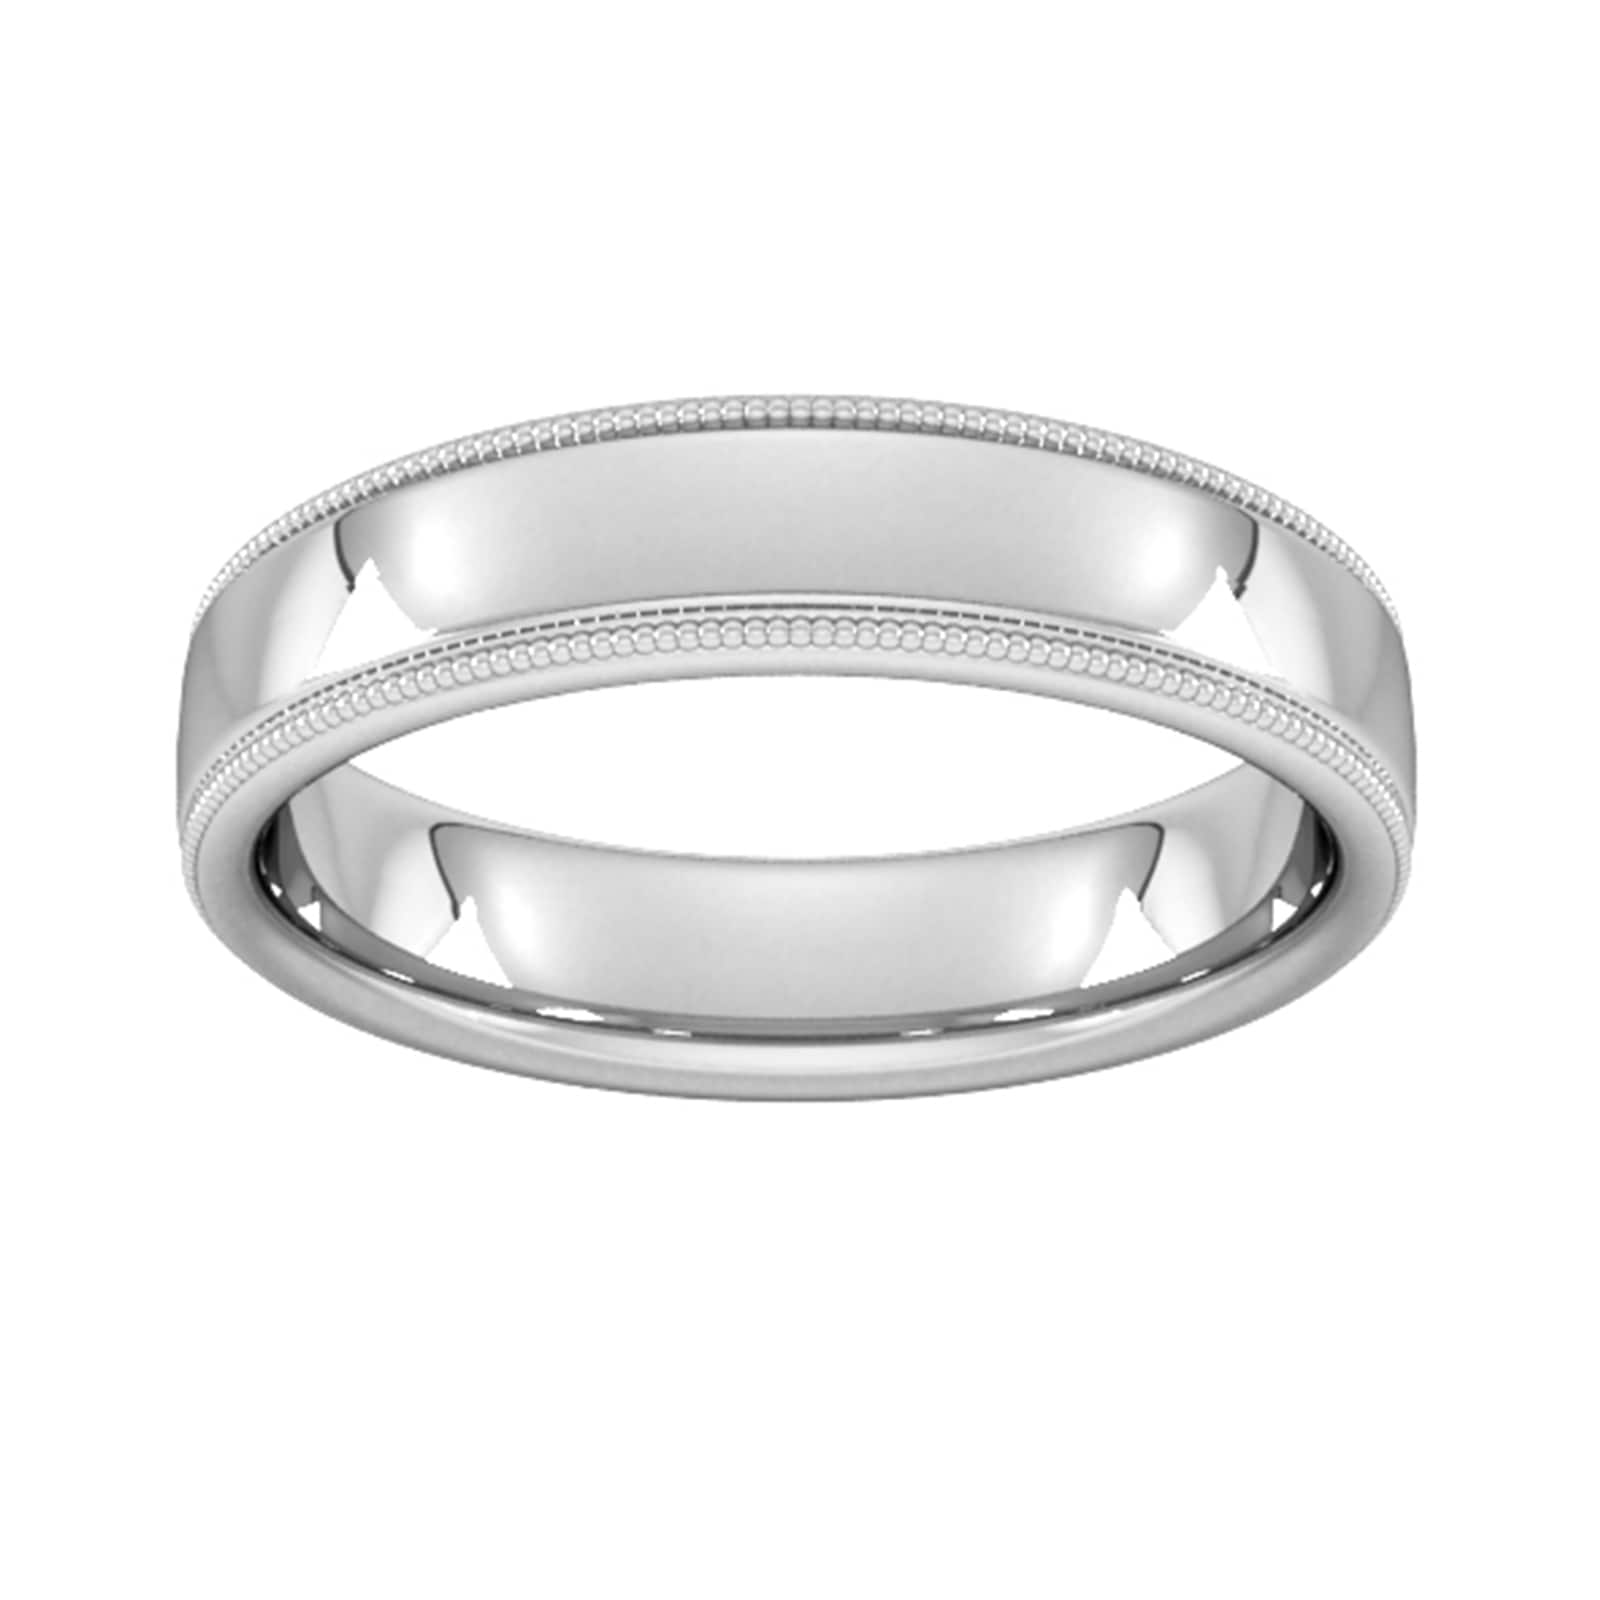 5mm Traditional Court Heavy Milgrain Edge Wedding Ring In 950 Palladium - Ring Size P